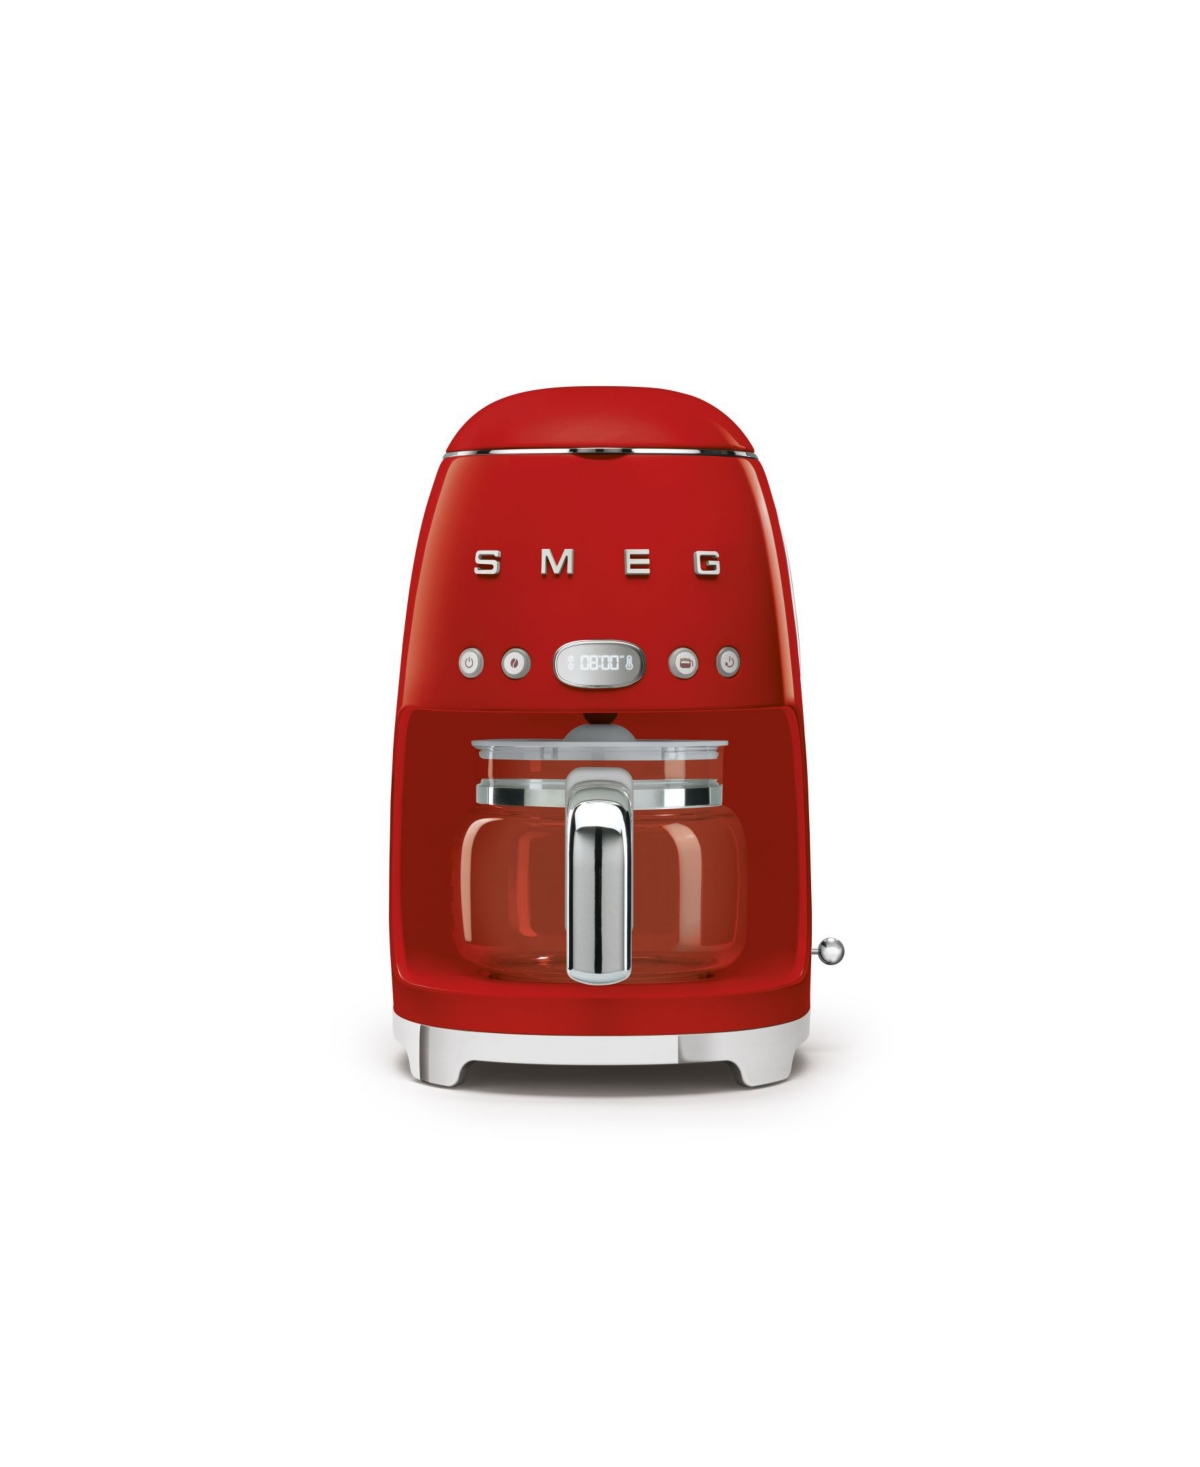 Smeg Drip Filter Coffee Machine In Red